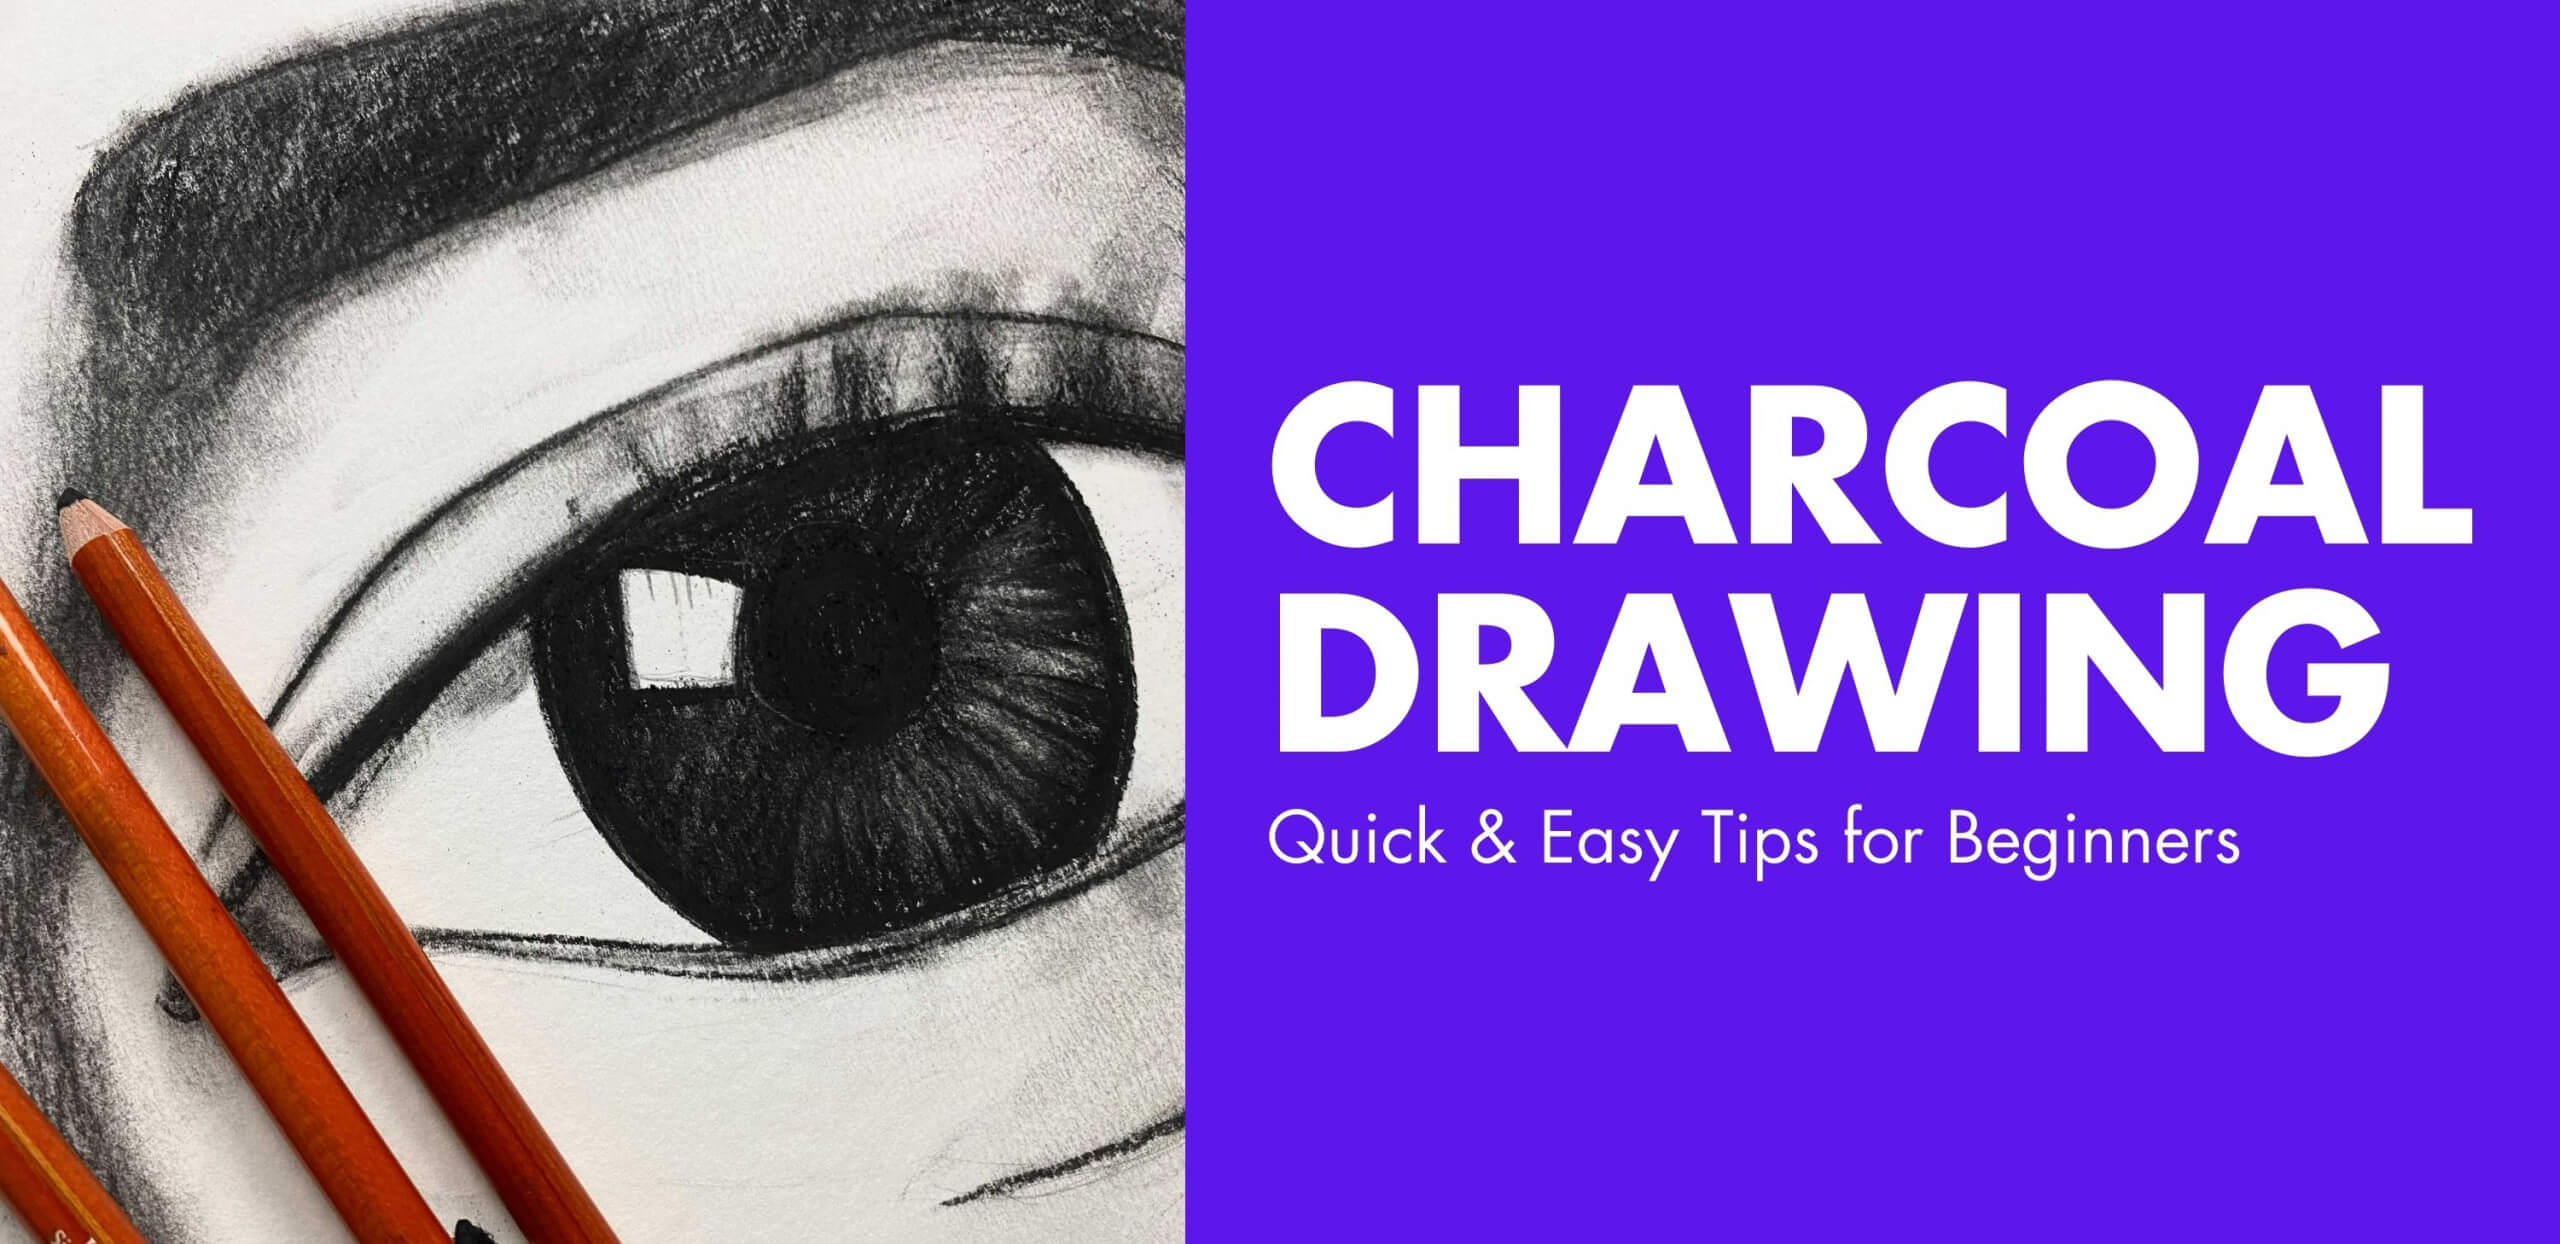 charcoal pencil drawing